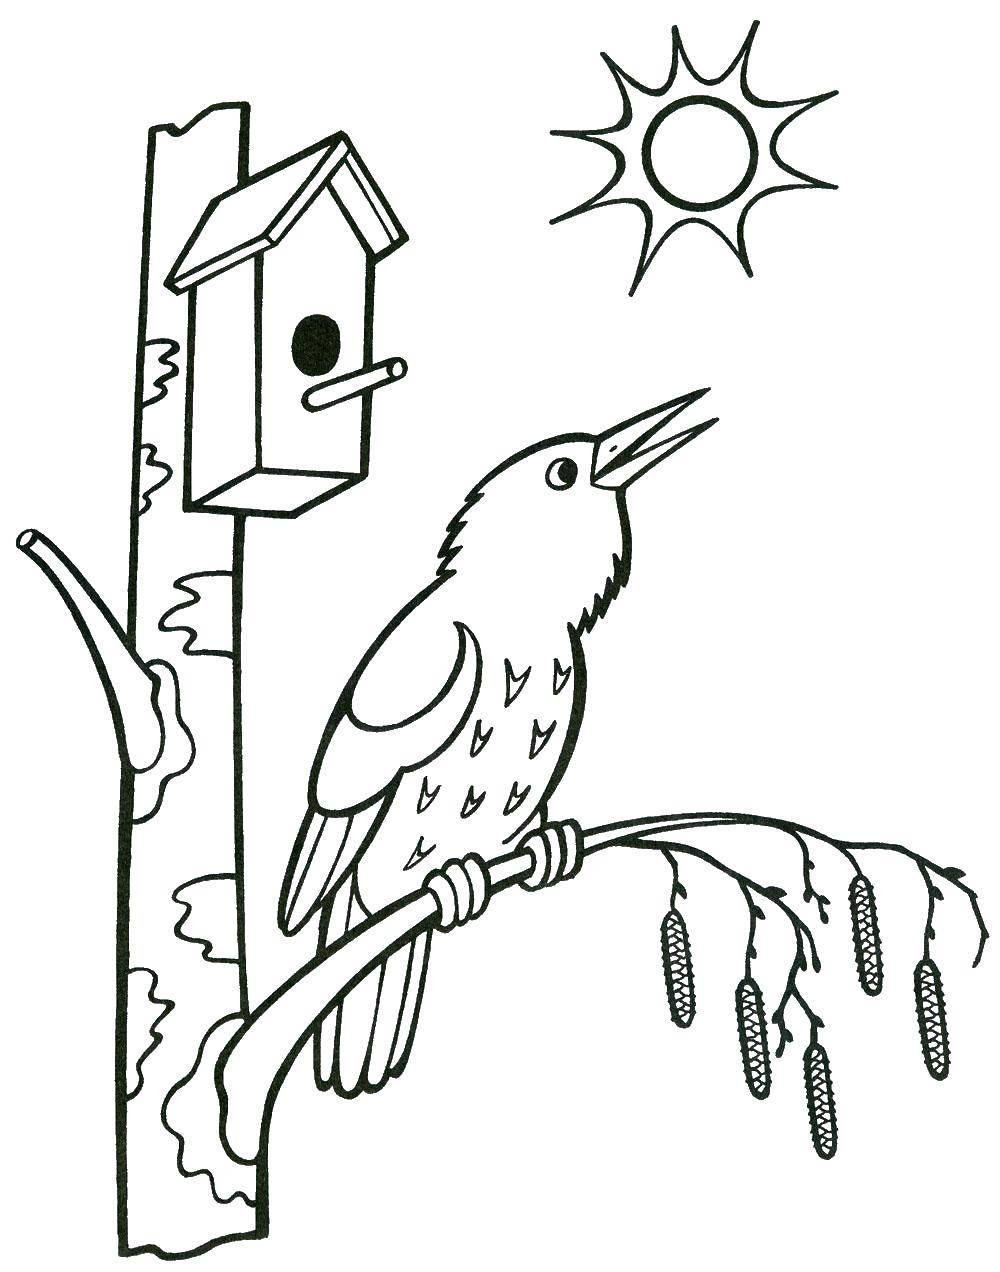 Название: Раскраска Птичка около скворечника. Категория: птицы. Теги: птицы, скворечник, солнце.